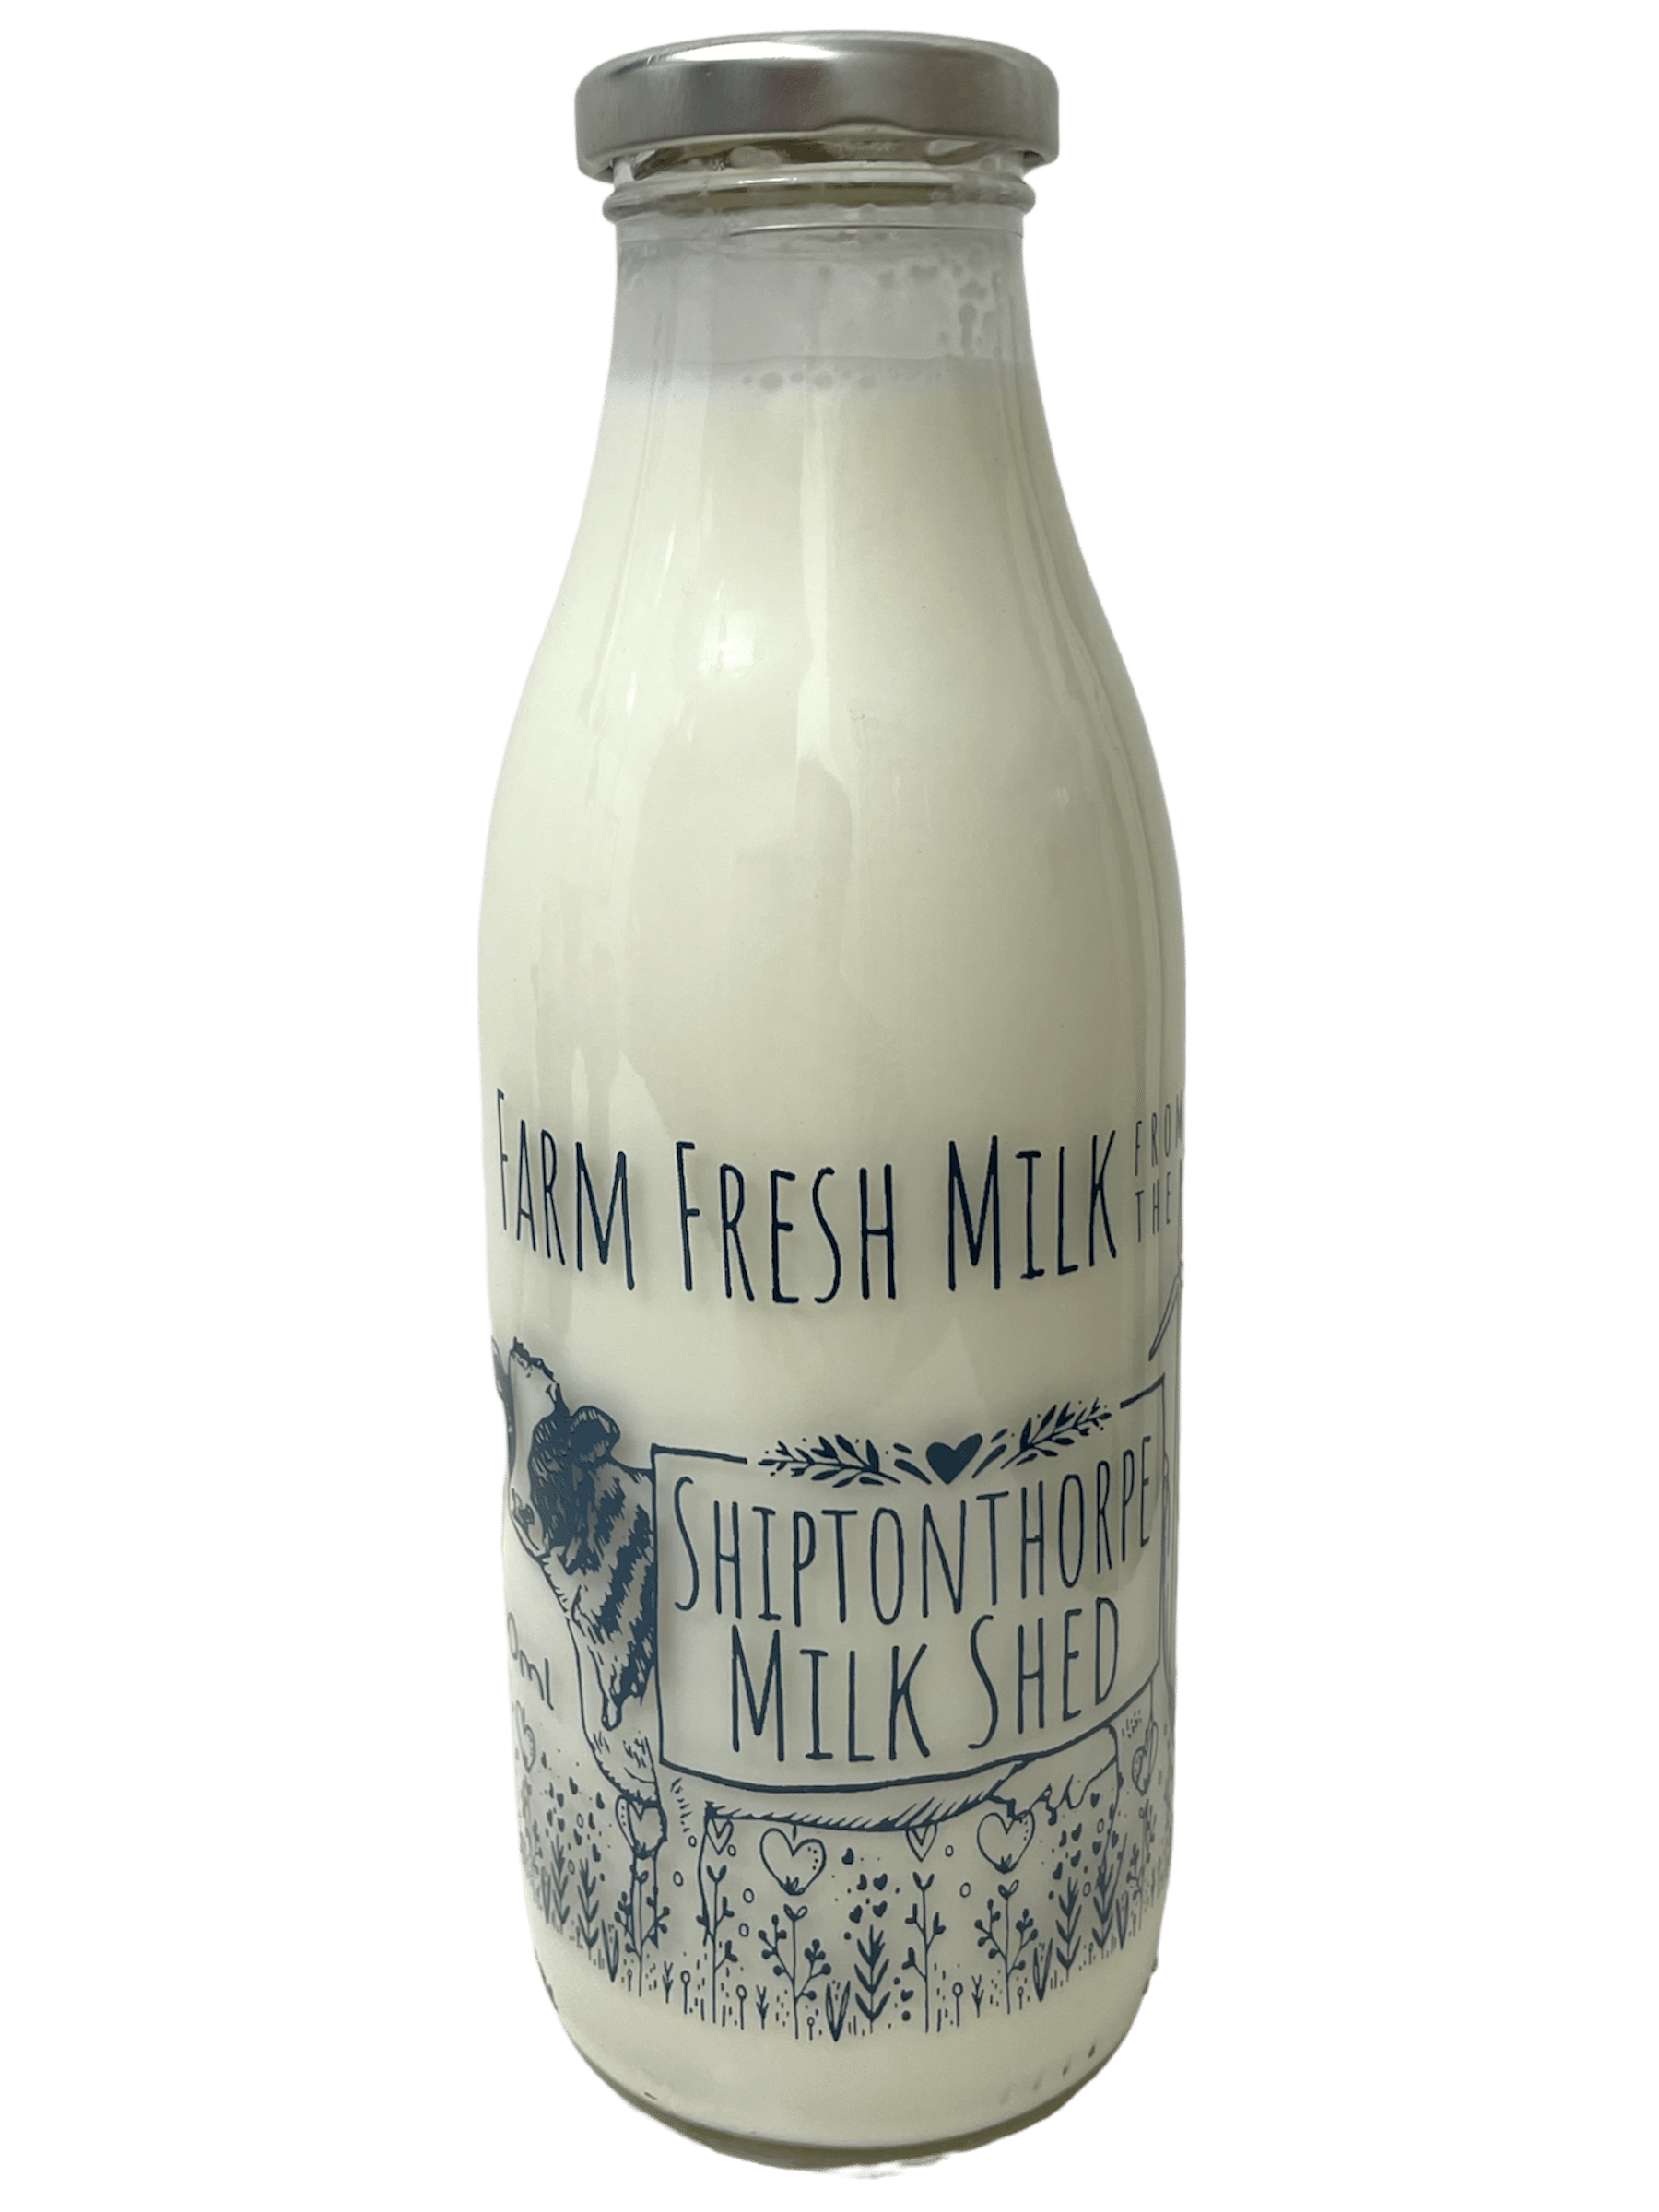 Shiptonthorpe Milk Shed - www.Kelis.info #KelisTheBottleBank